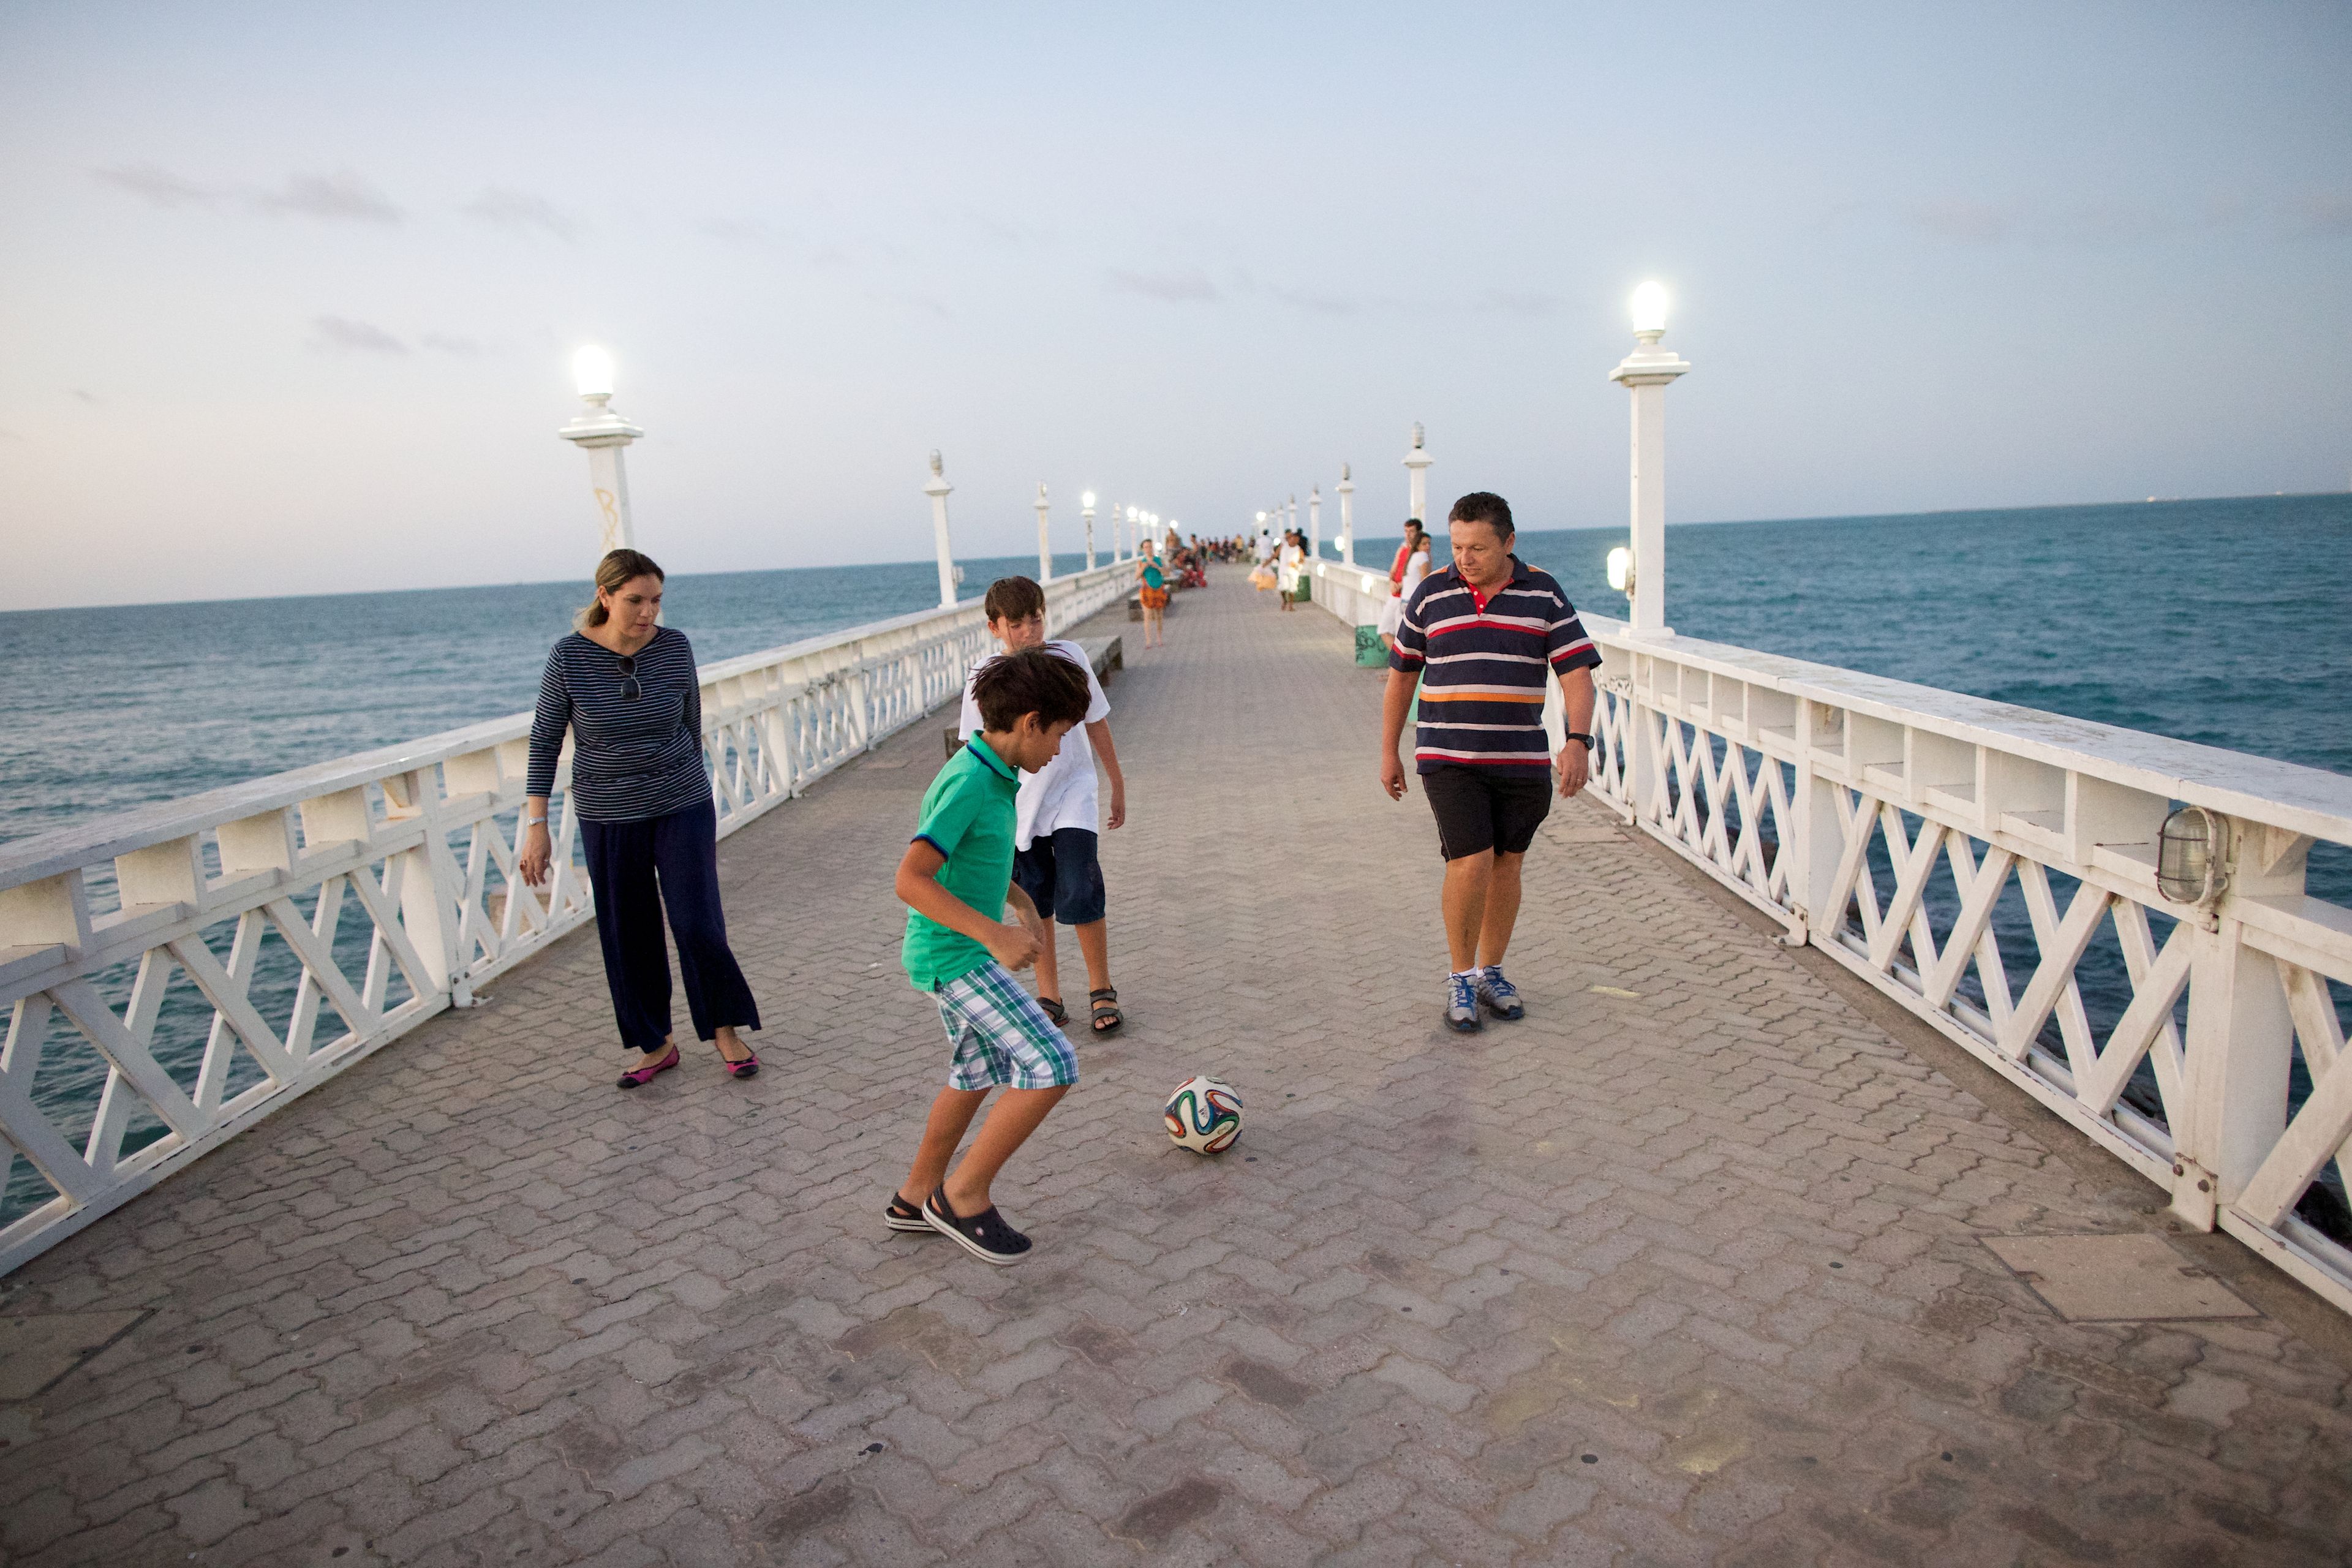 A family kicks a soccer ball on a pier.